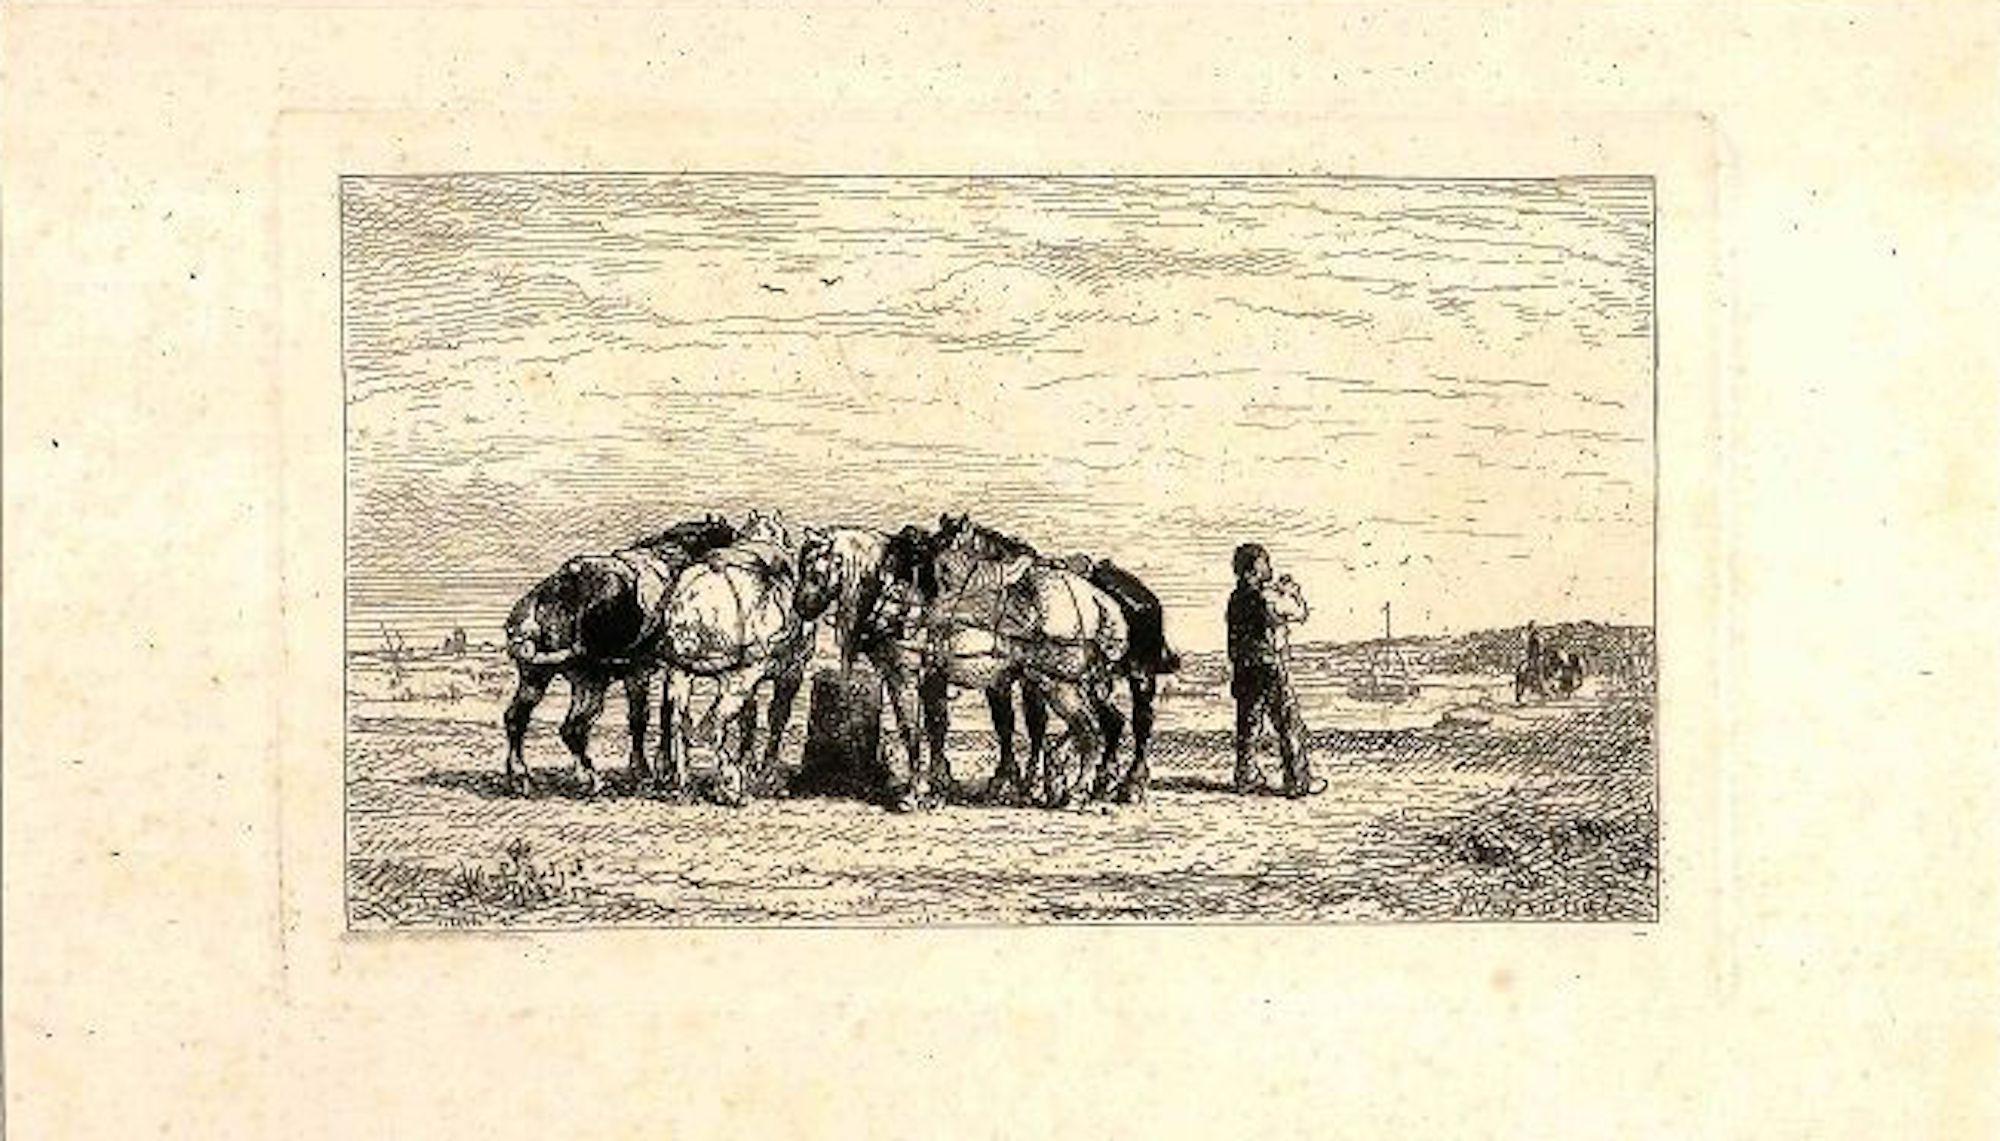 Jules Jacques Veyrassat Figurative Print - Horses in the Landscape - Original Etching by J.J. Veyrassat - Late 19th Century